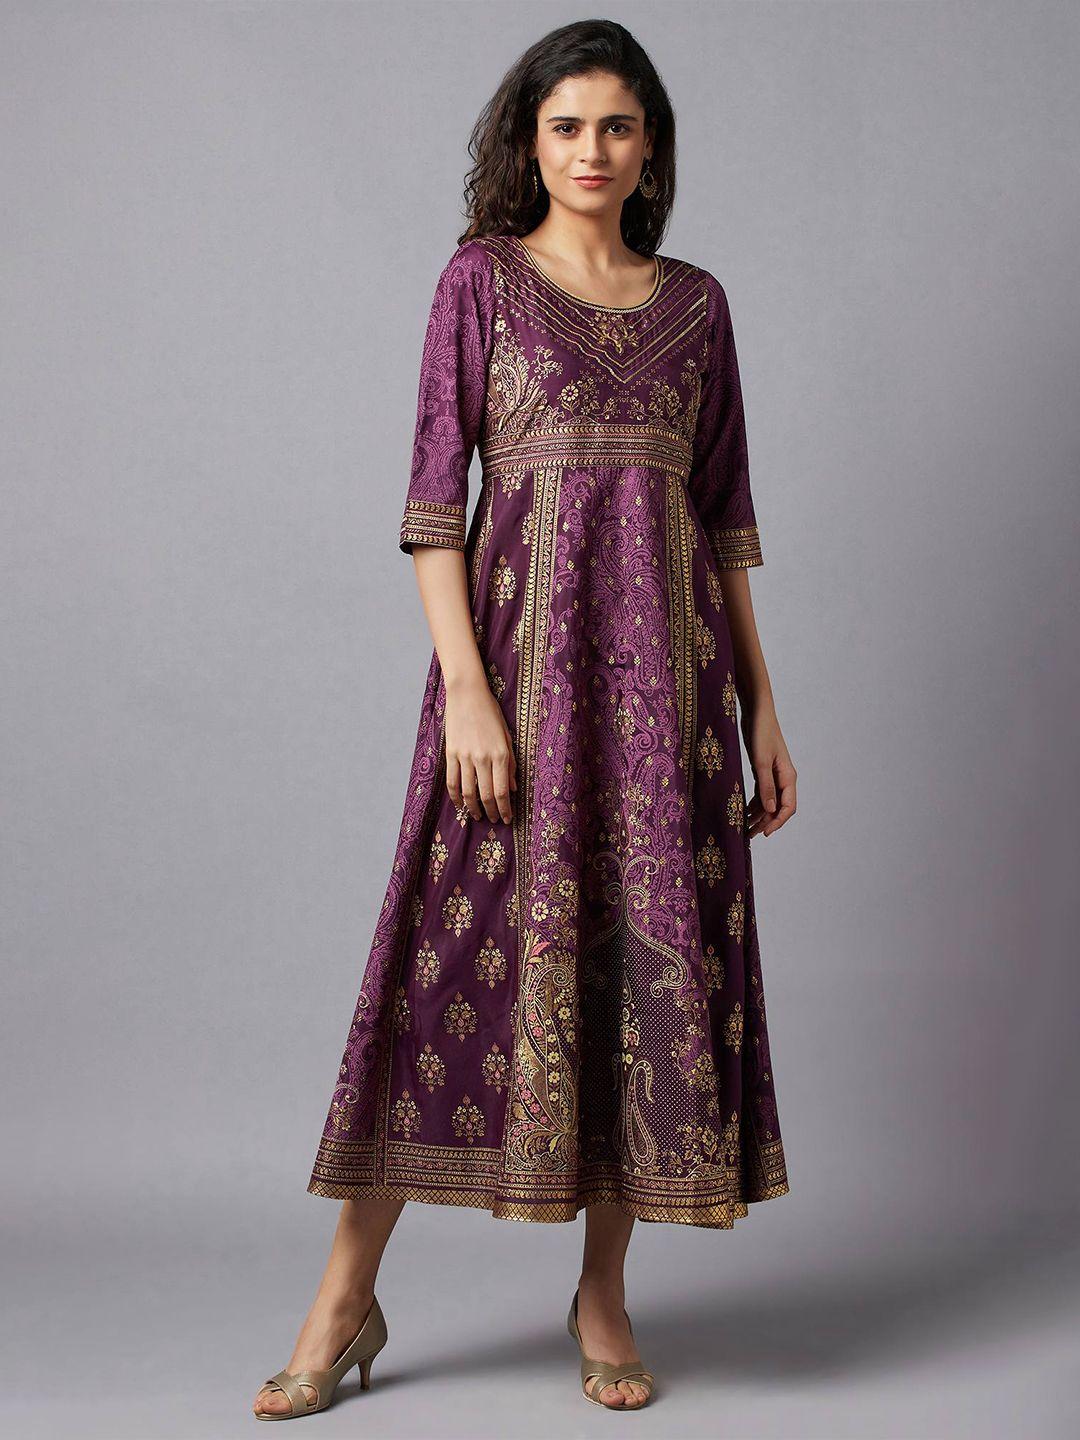 aurelia purple ethnic motifs embroidered ethnic empire maxi dress